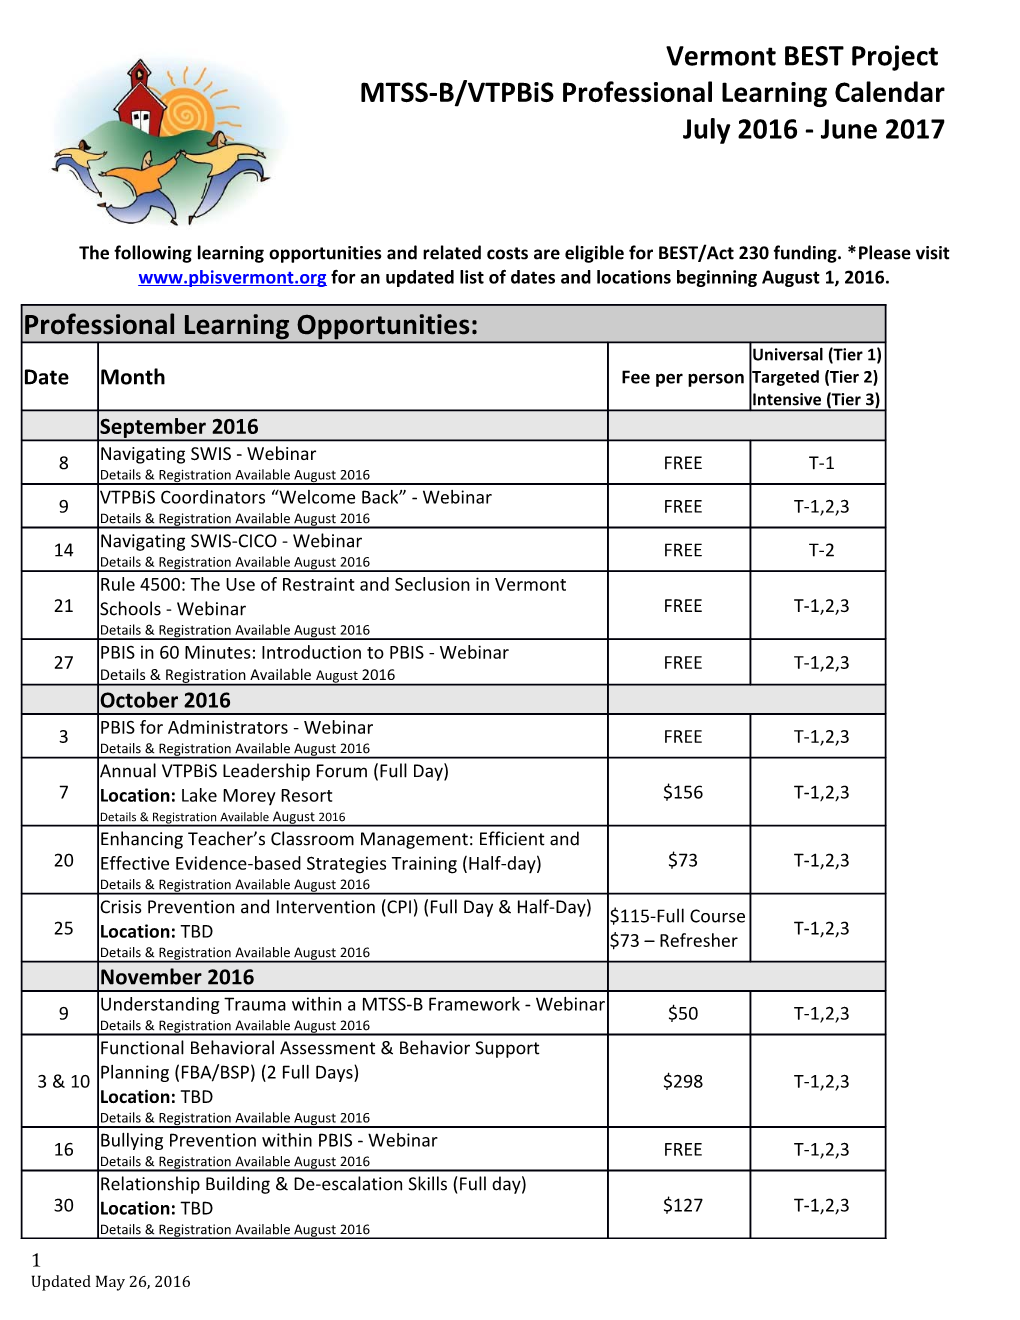 MTSS-B/Vtpbis Professional Learning Calendar